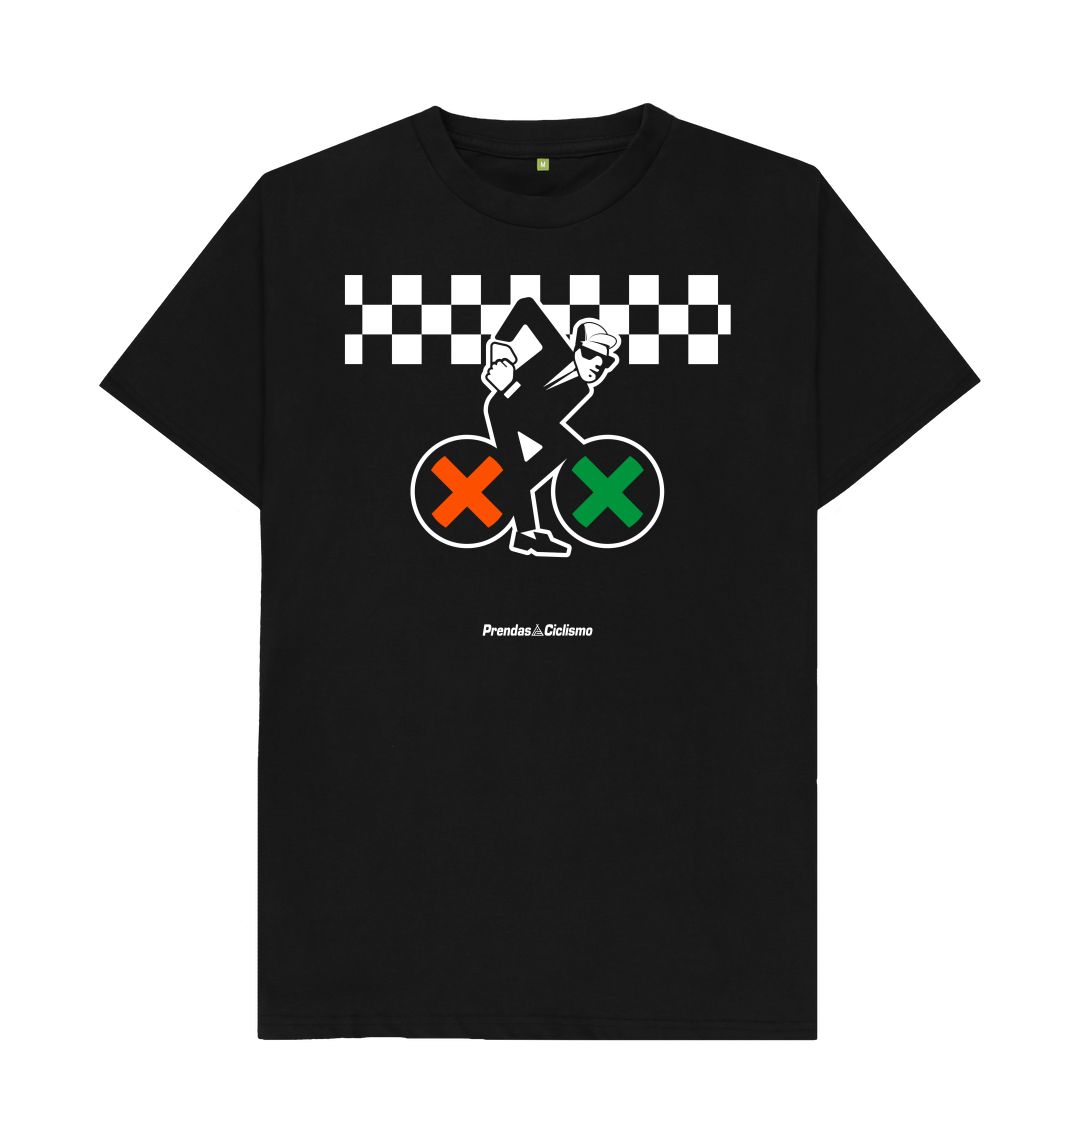 Black Prendas Ciclismo Anniversary T-Shirt